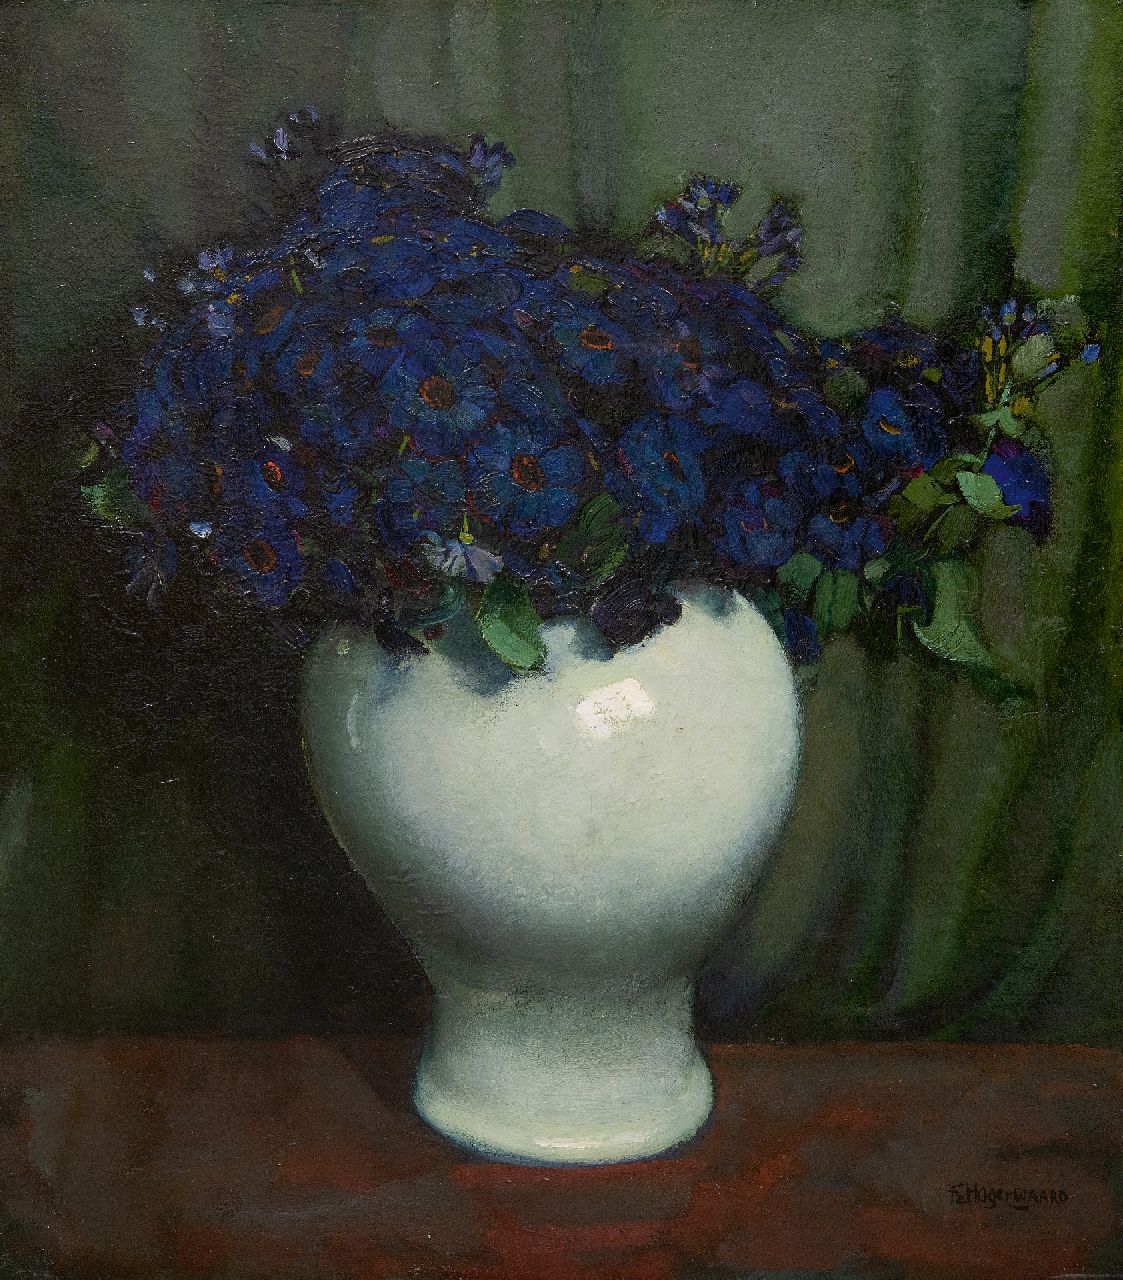 Frans Hogerwaard | Blue flowers in a white pot, oil on canvas, 70.0 x 60.0 cm, signed l.r.